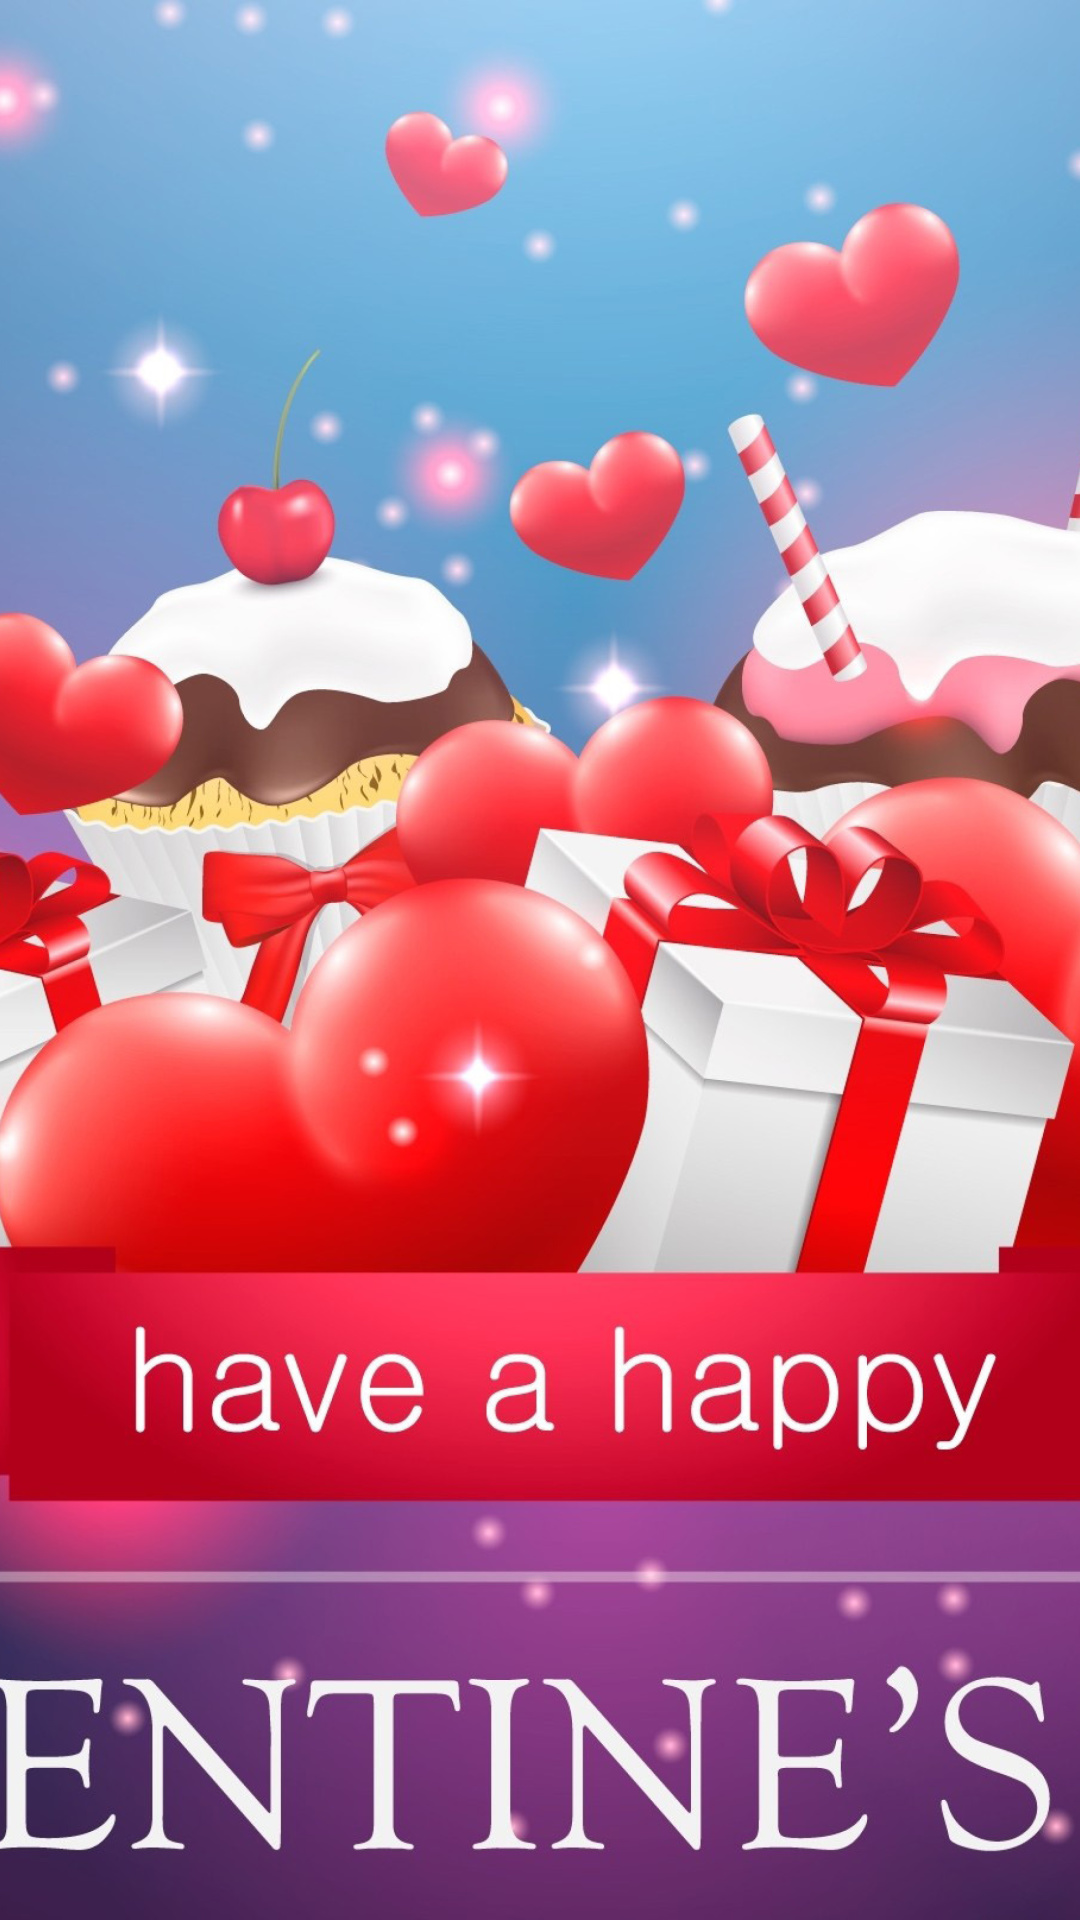 Happy Valentines Day wallpaper 1080x1920